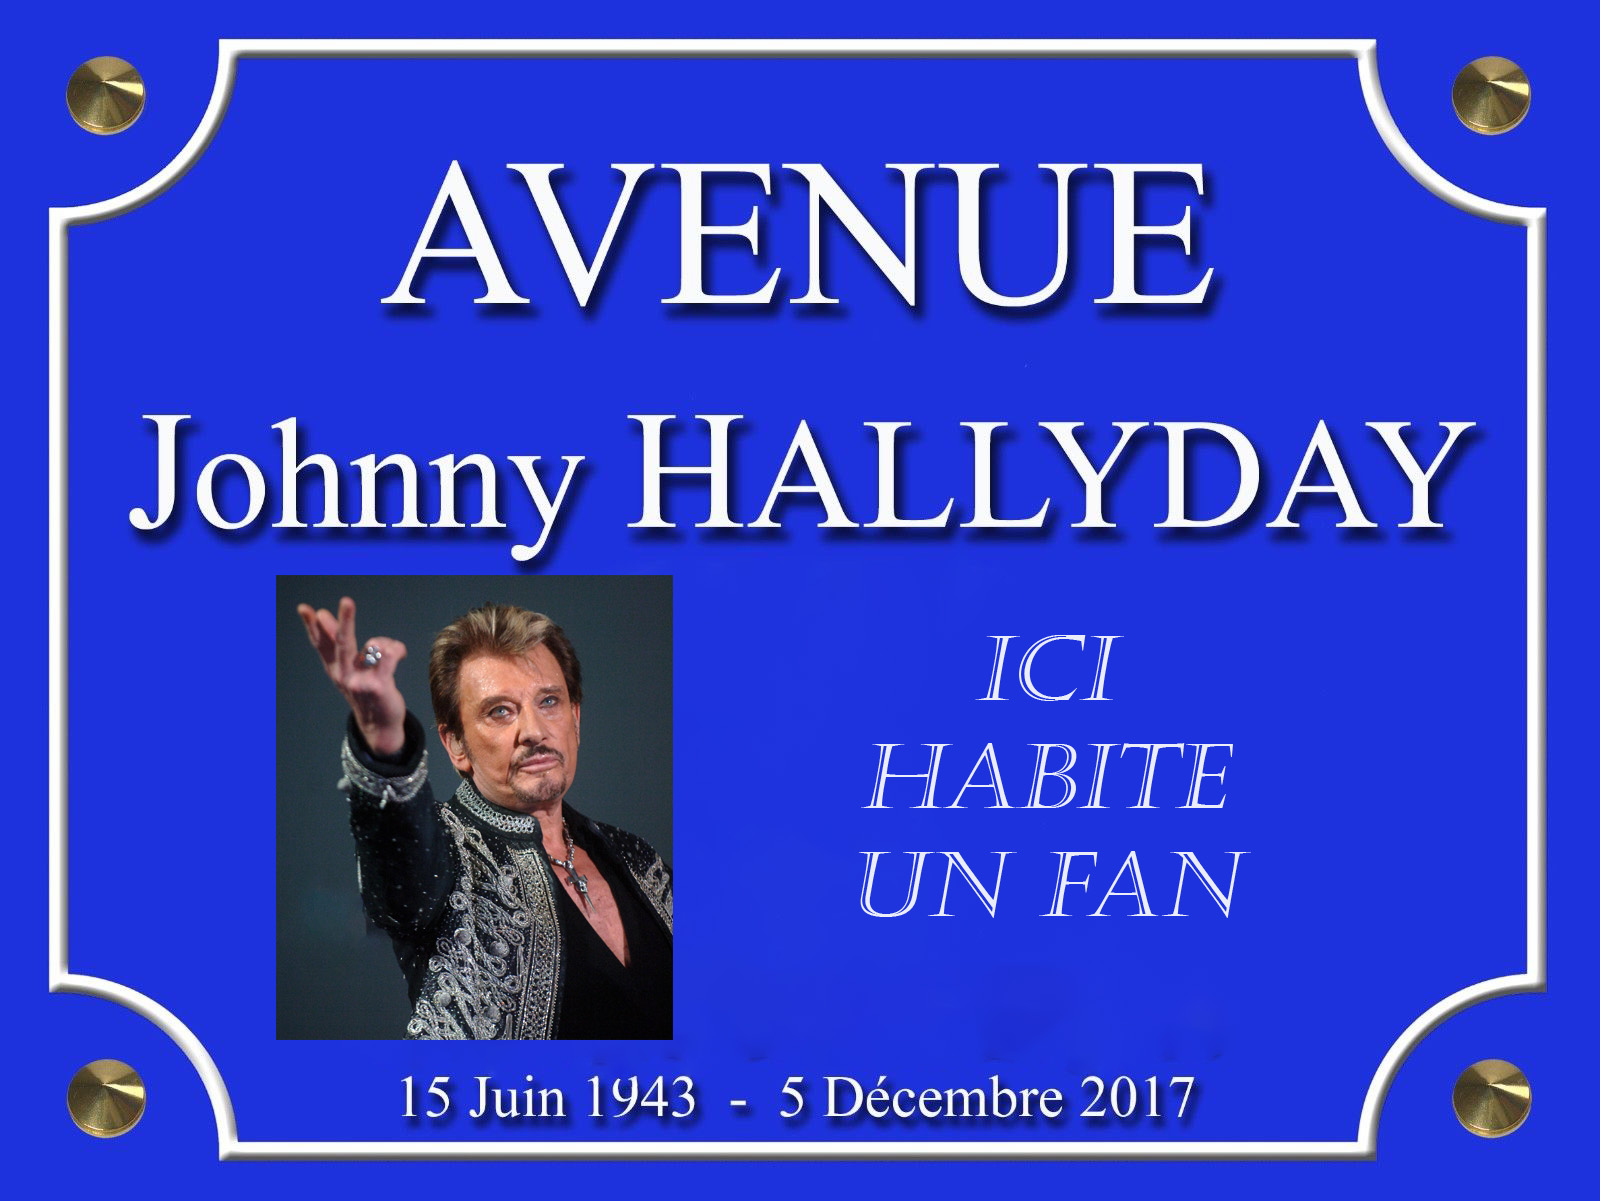 AVENUE Johnny HALLYDAY ICI HABITE UN FAN